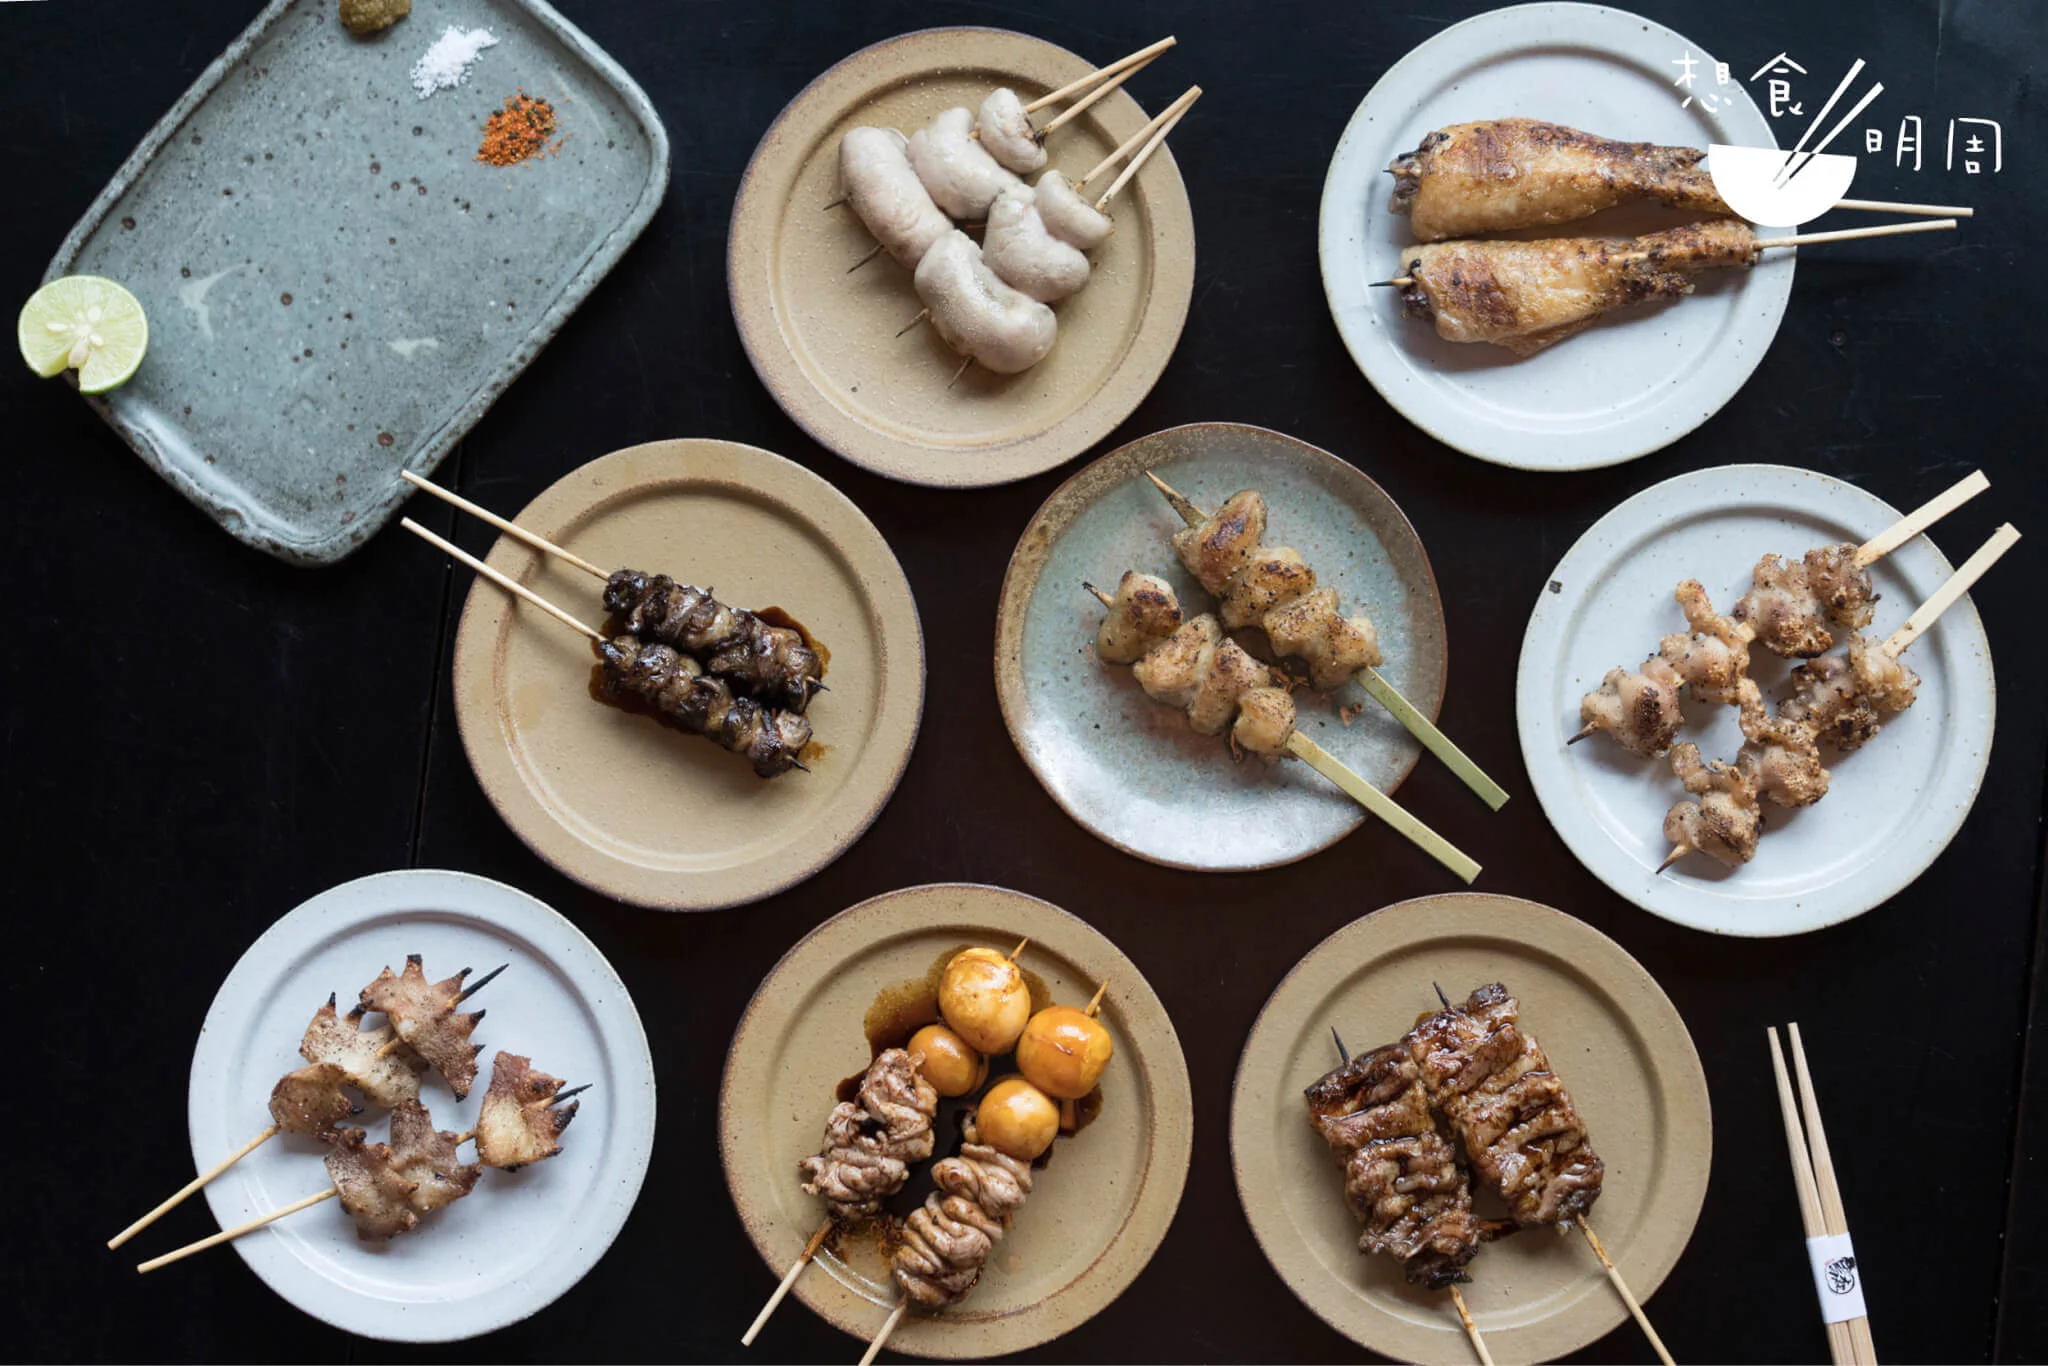 日式烤雞串（焼き鳥／やきとり Yakitori）的選擇總是多元而豐富，從雞子、雞翼，至提登等等。質感、風味全然不同，各有可取之處。